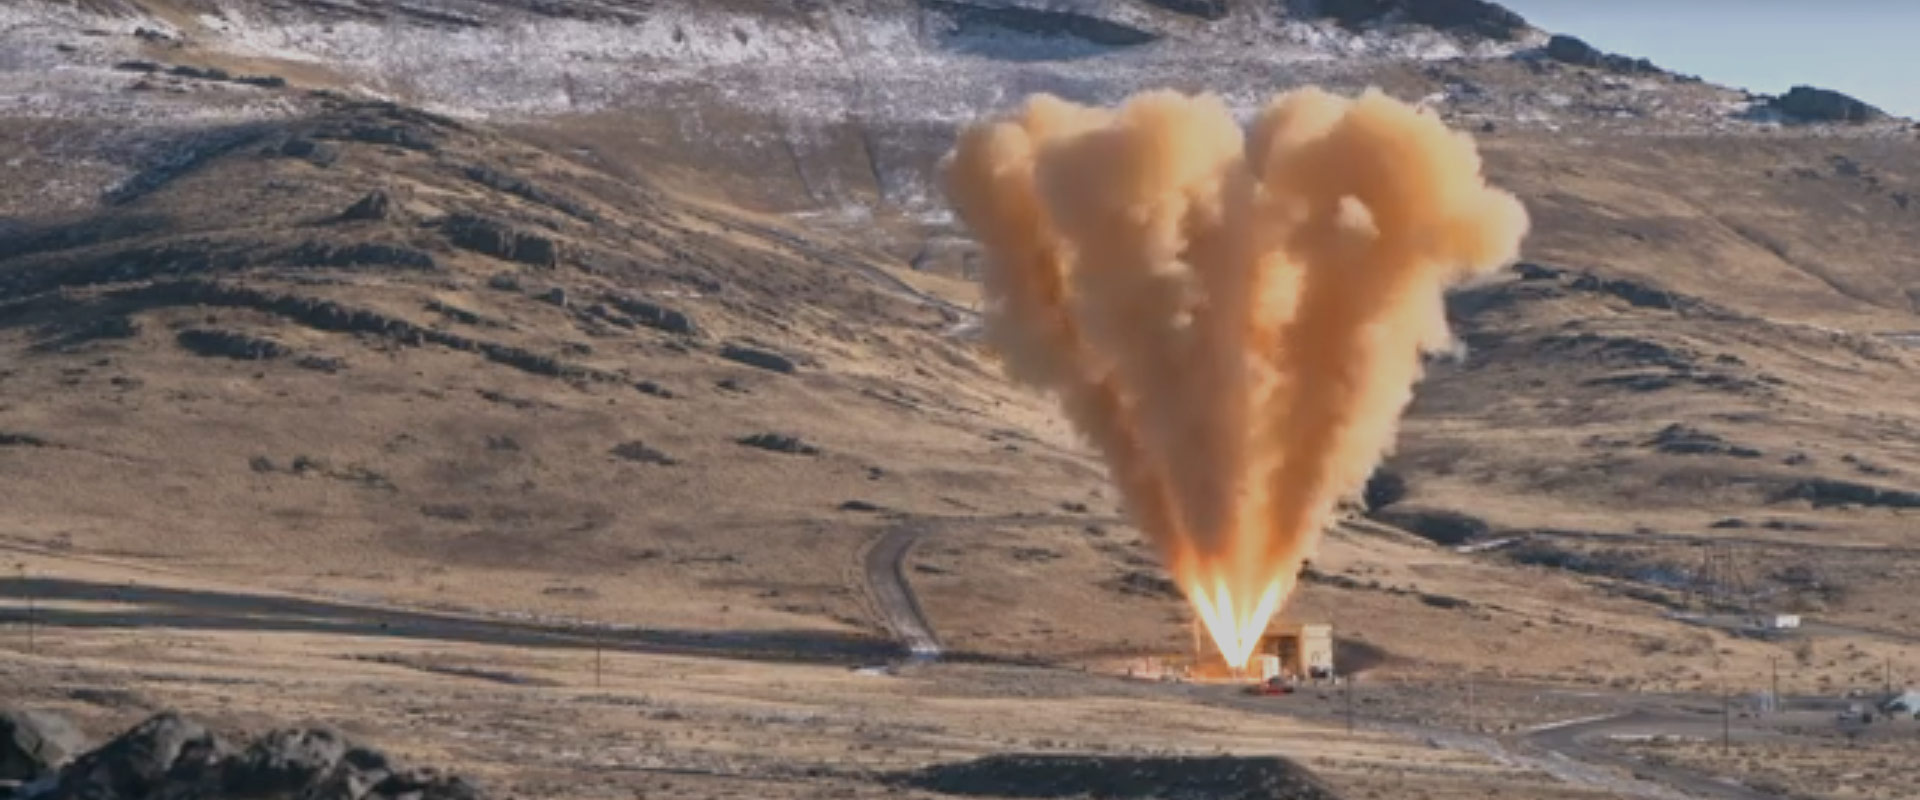 rocket test in desert mountains